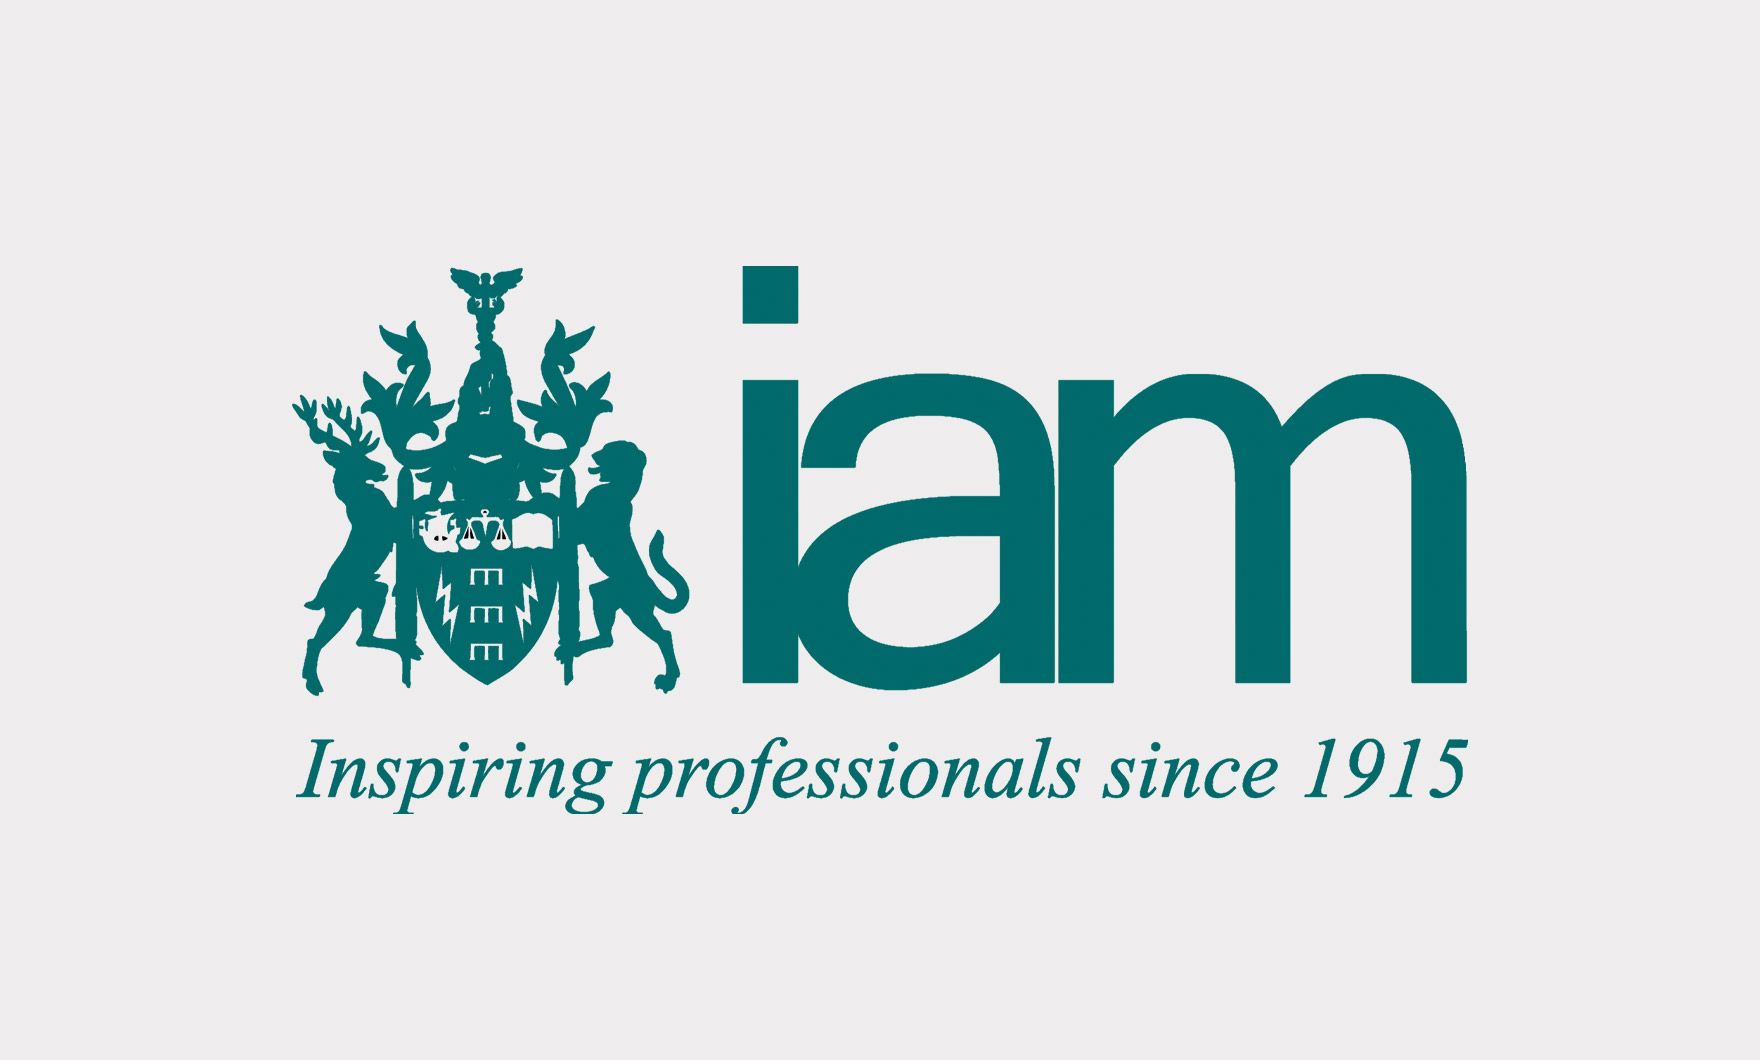 IAM Corporate Membership